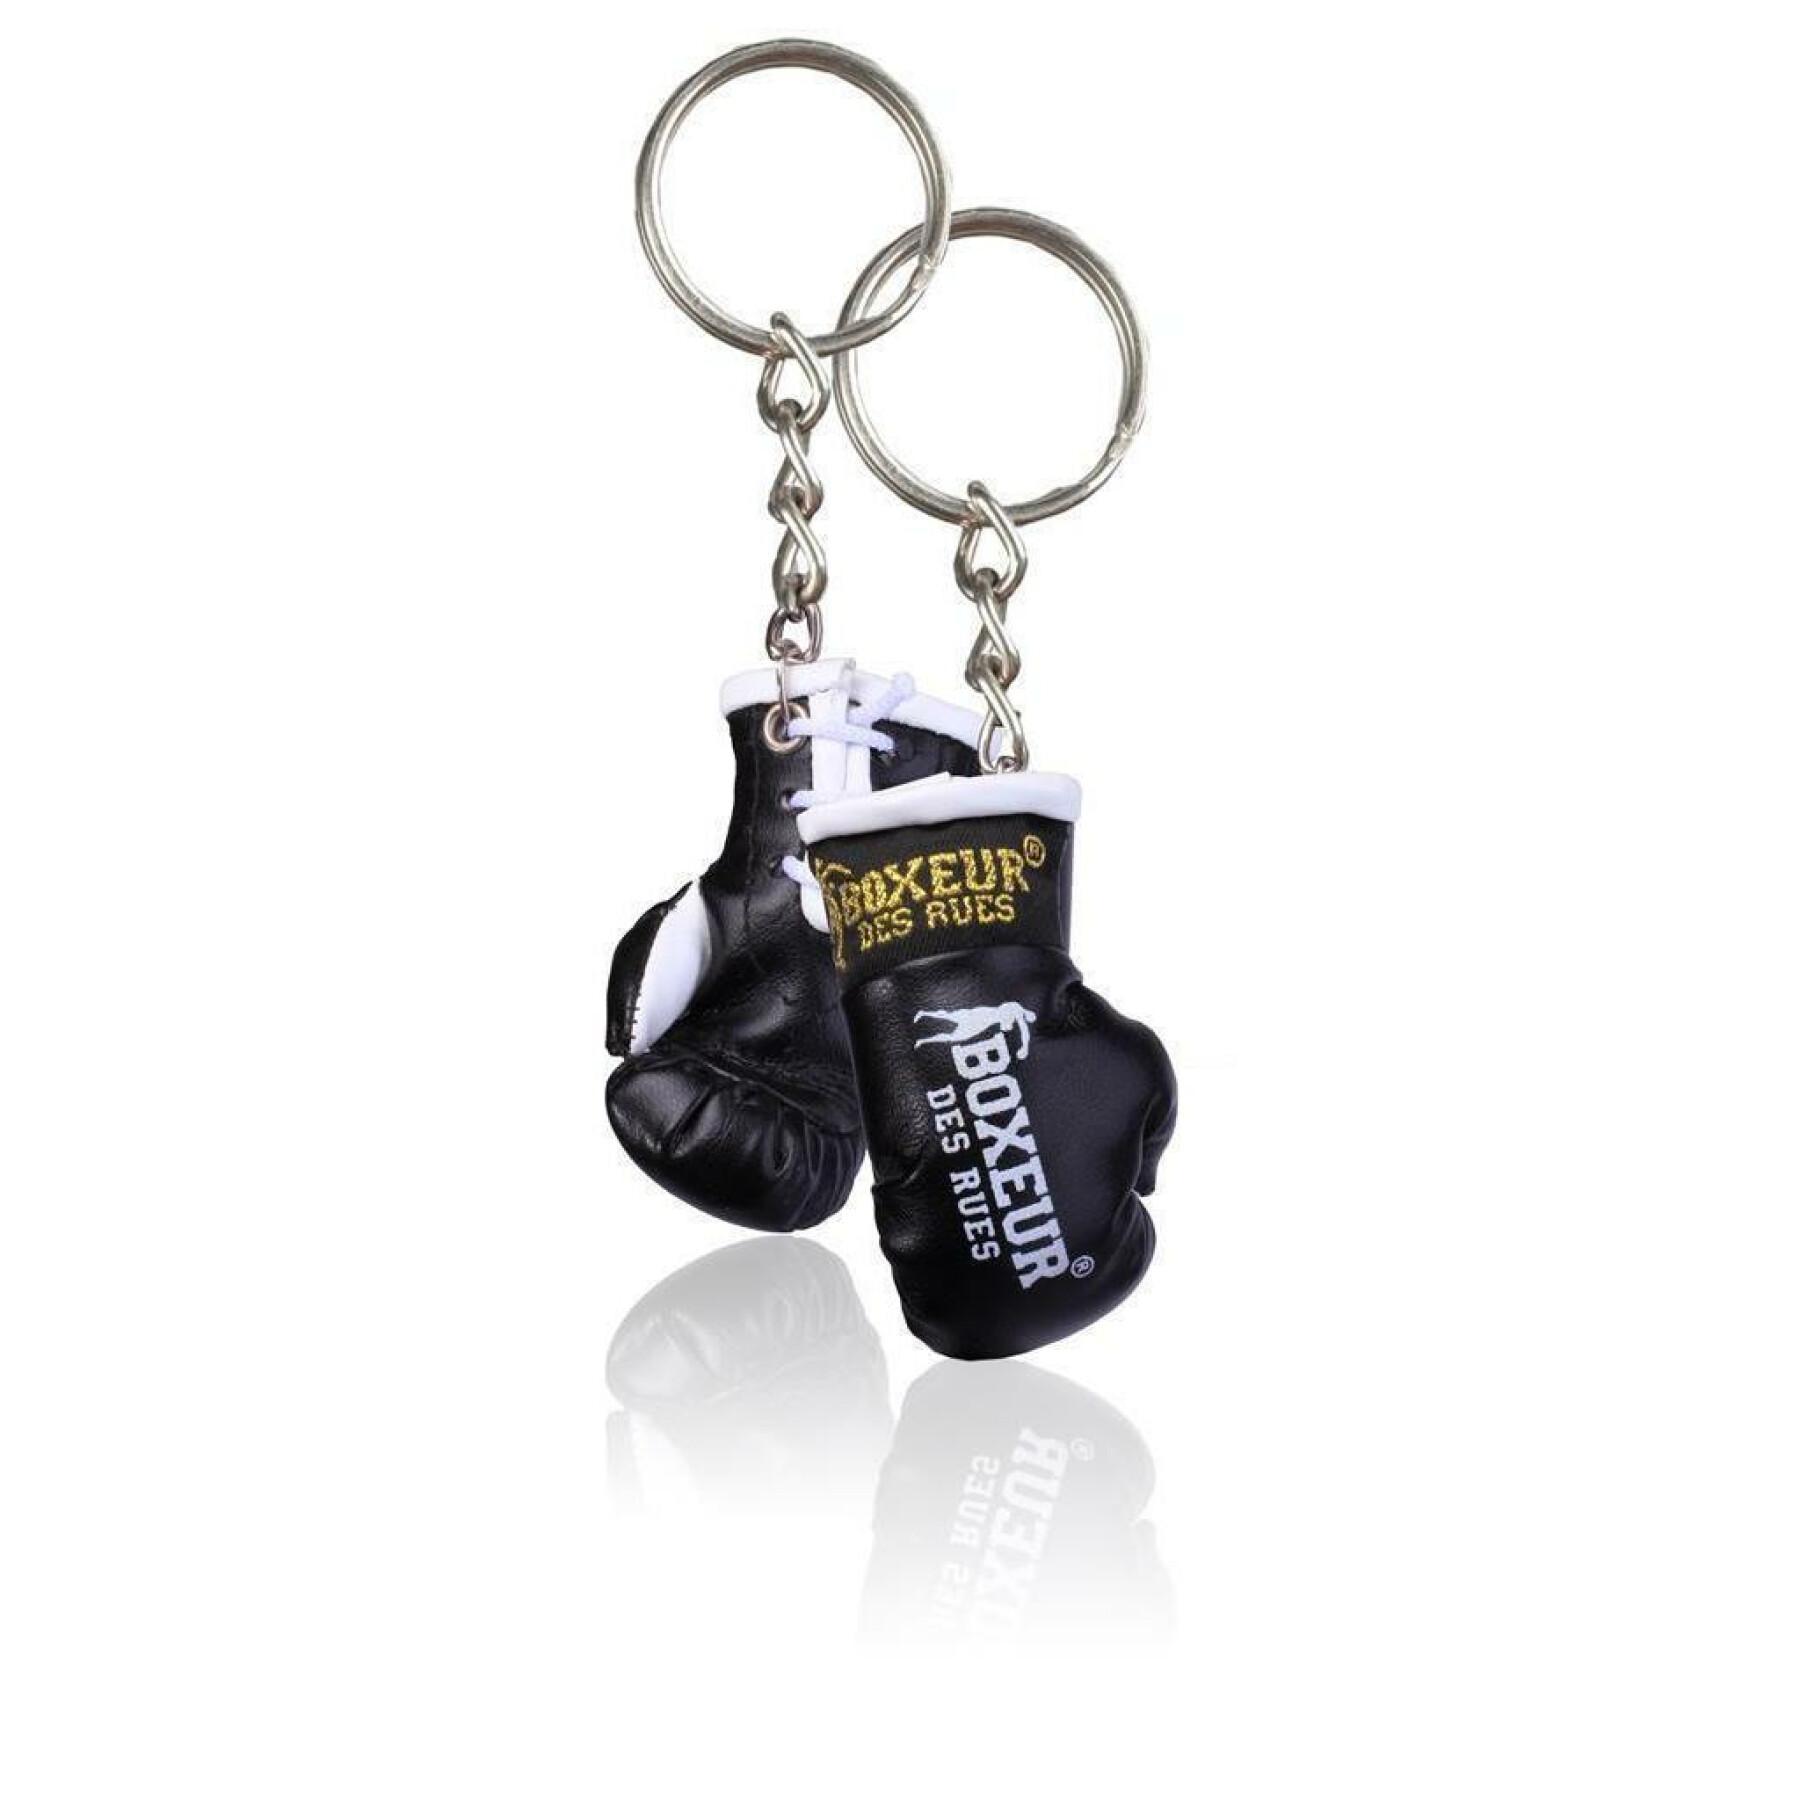 Boxing glove key ring Boxeur des Rues